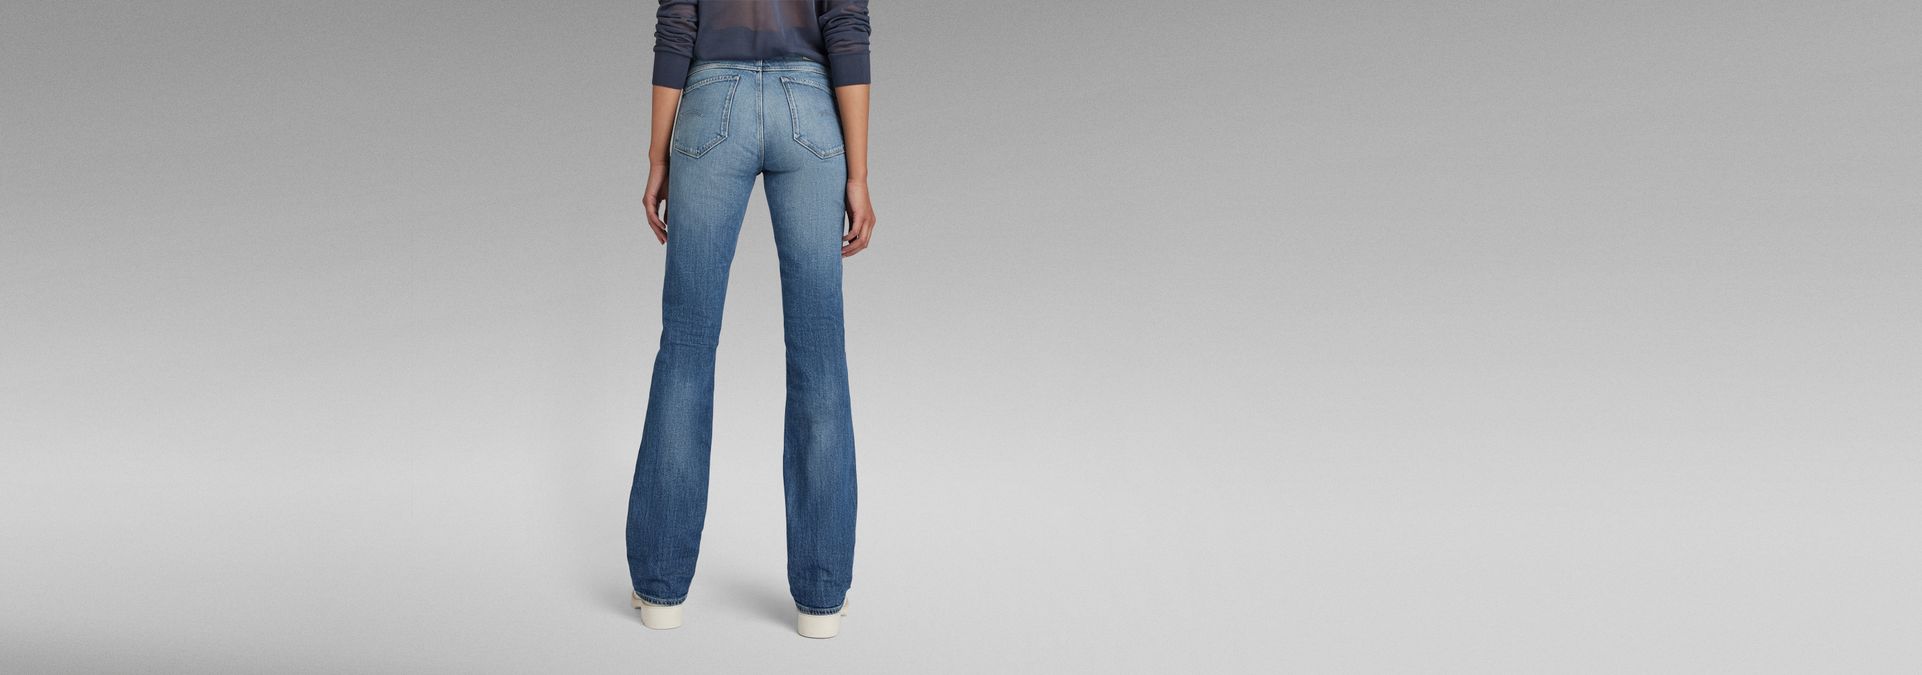 Balmain Denim Low-rise Bootcut Jeans in Grey Womens Jeans Balmain Jeans Blue 